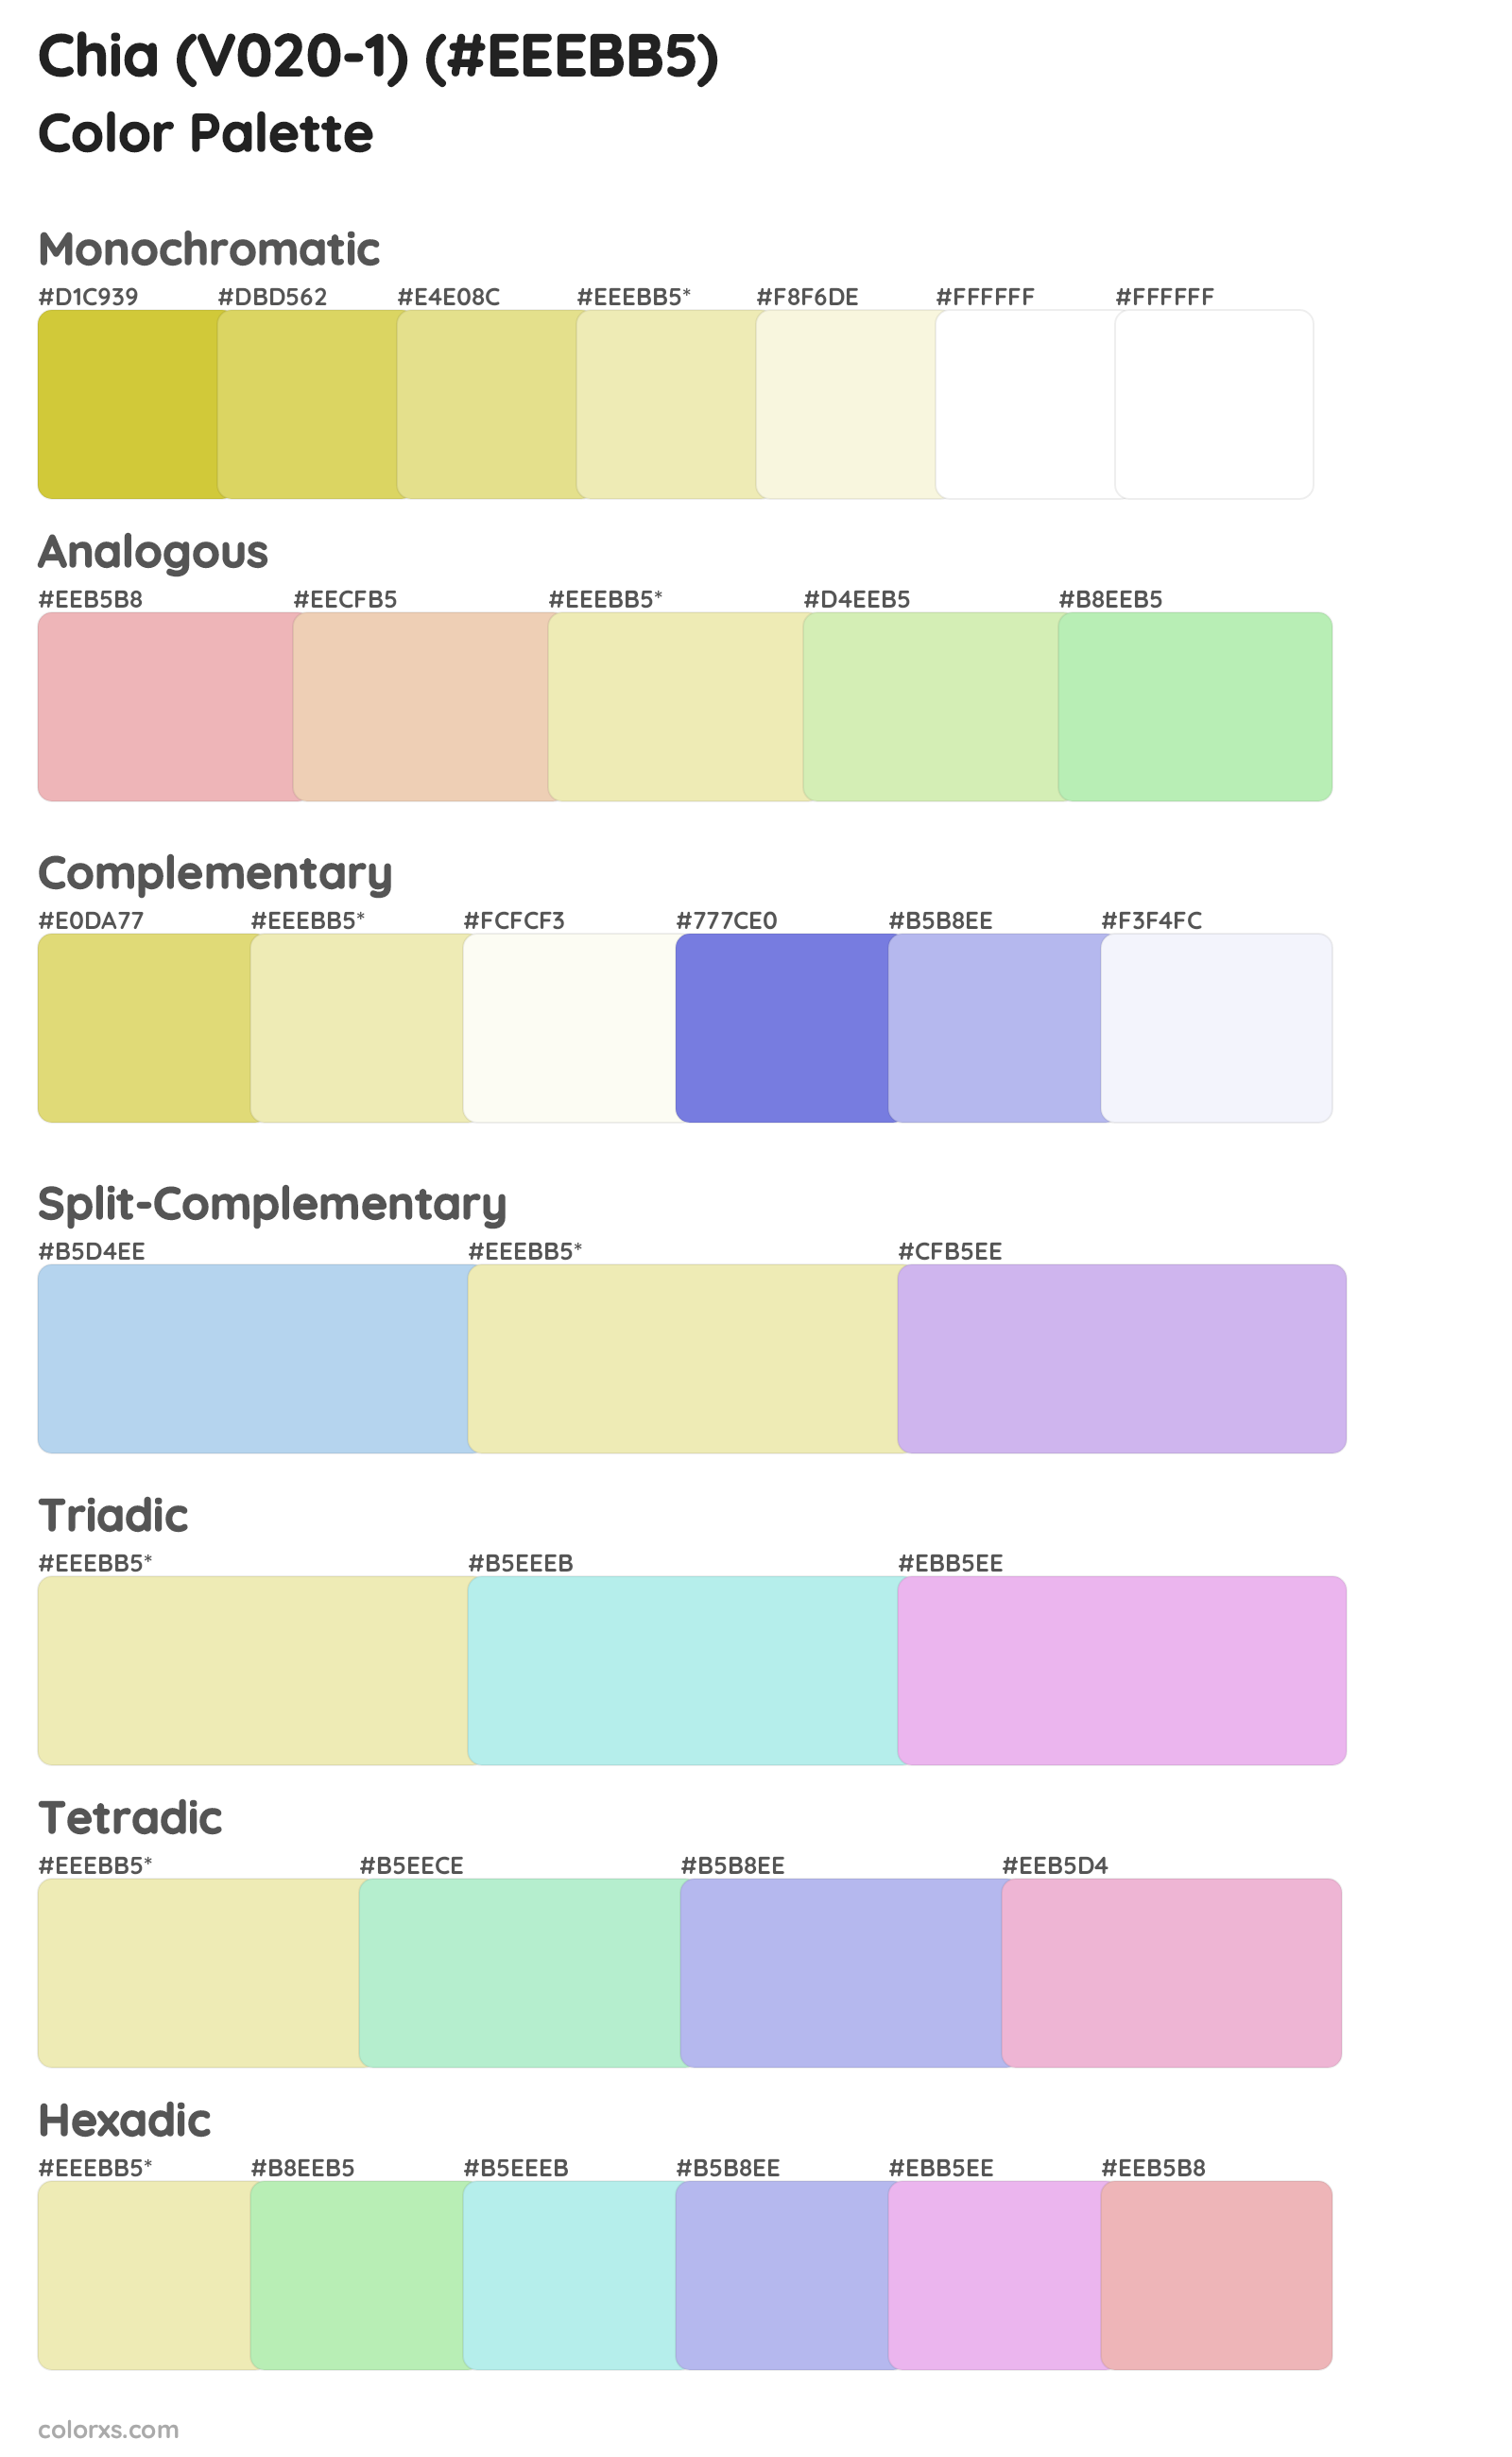 Chia (V020-1) Color Scheme Palettes